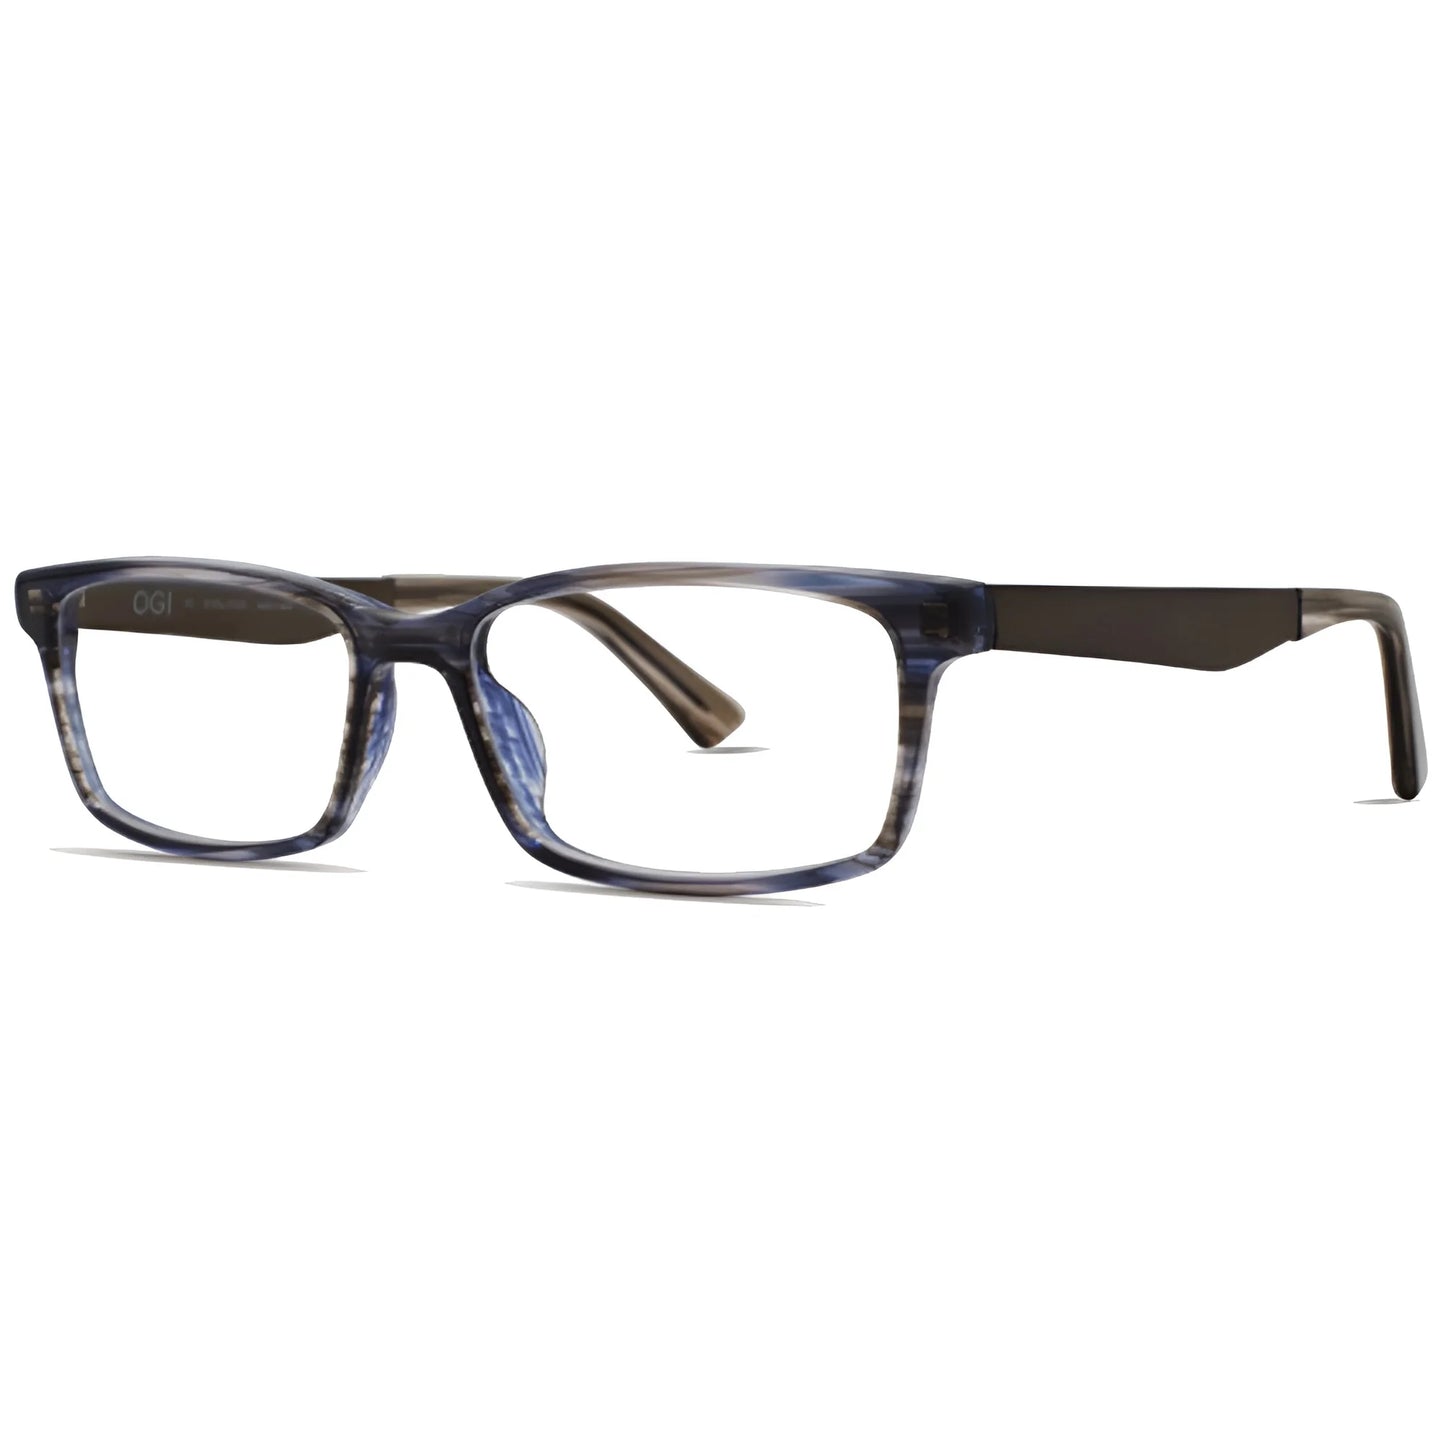 OGI 9235 Eyeglasses